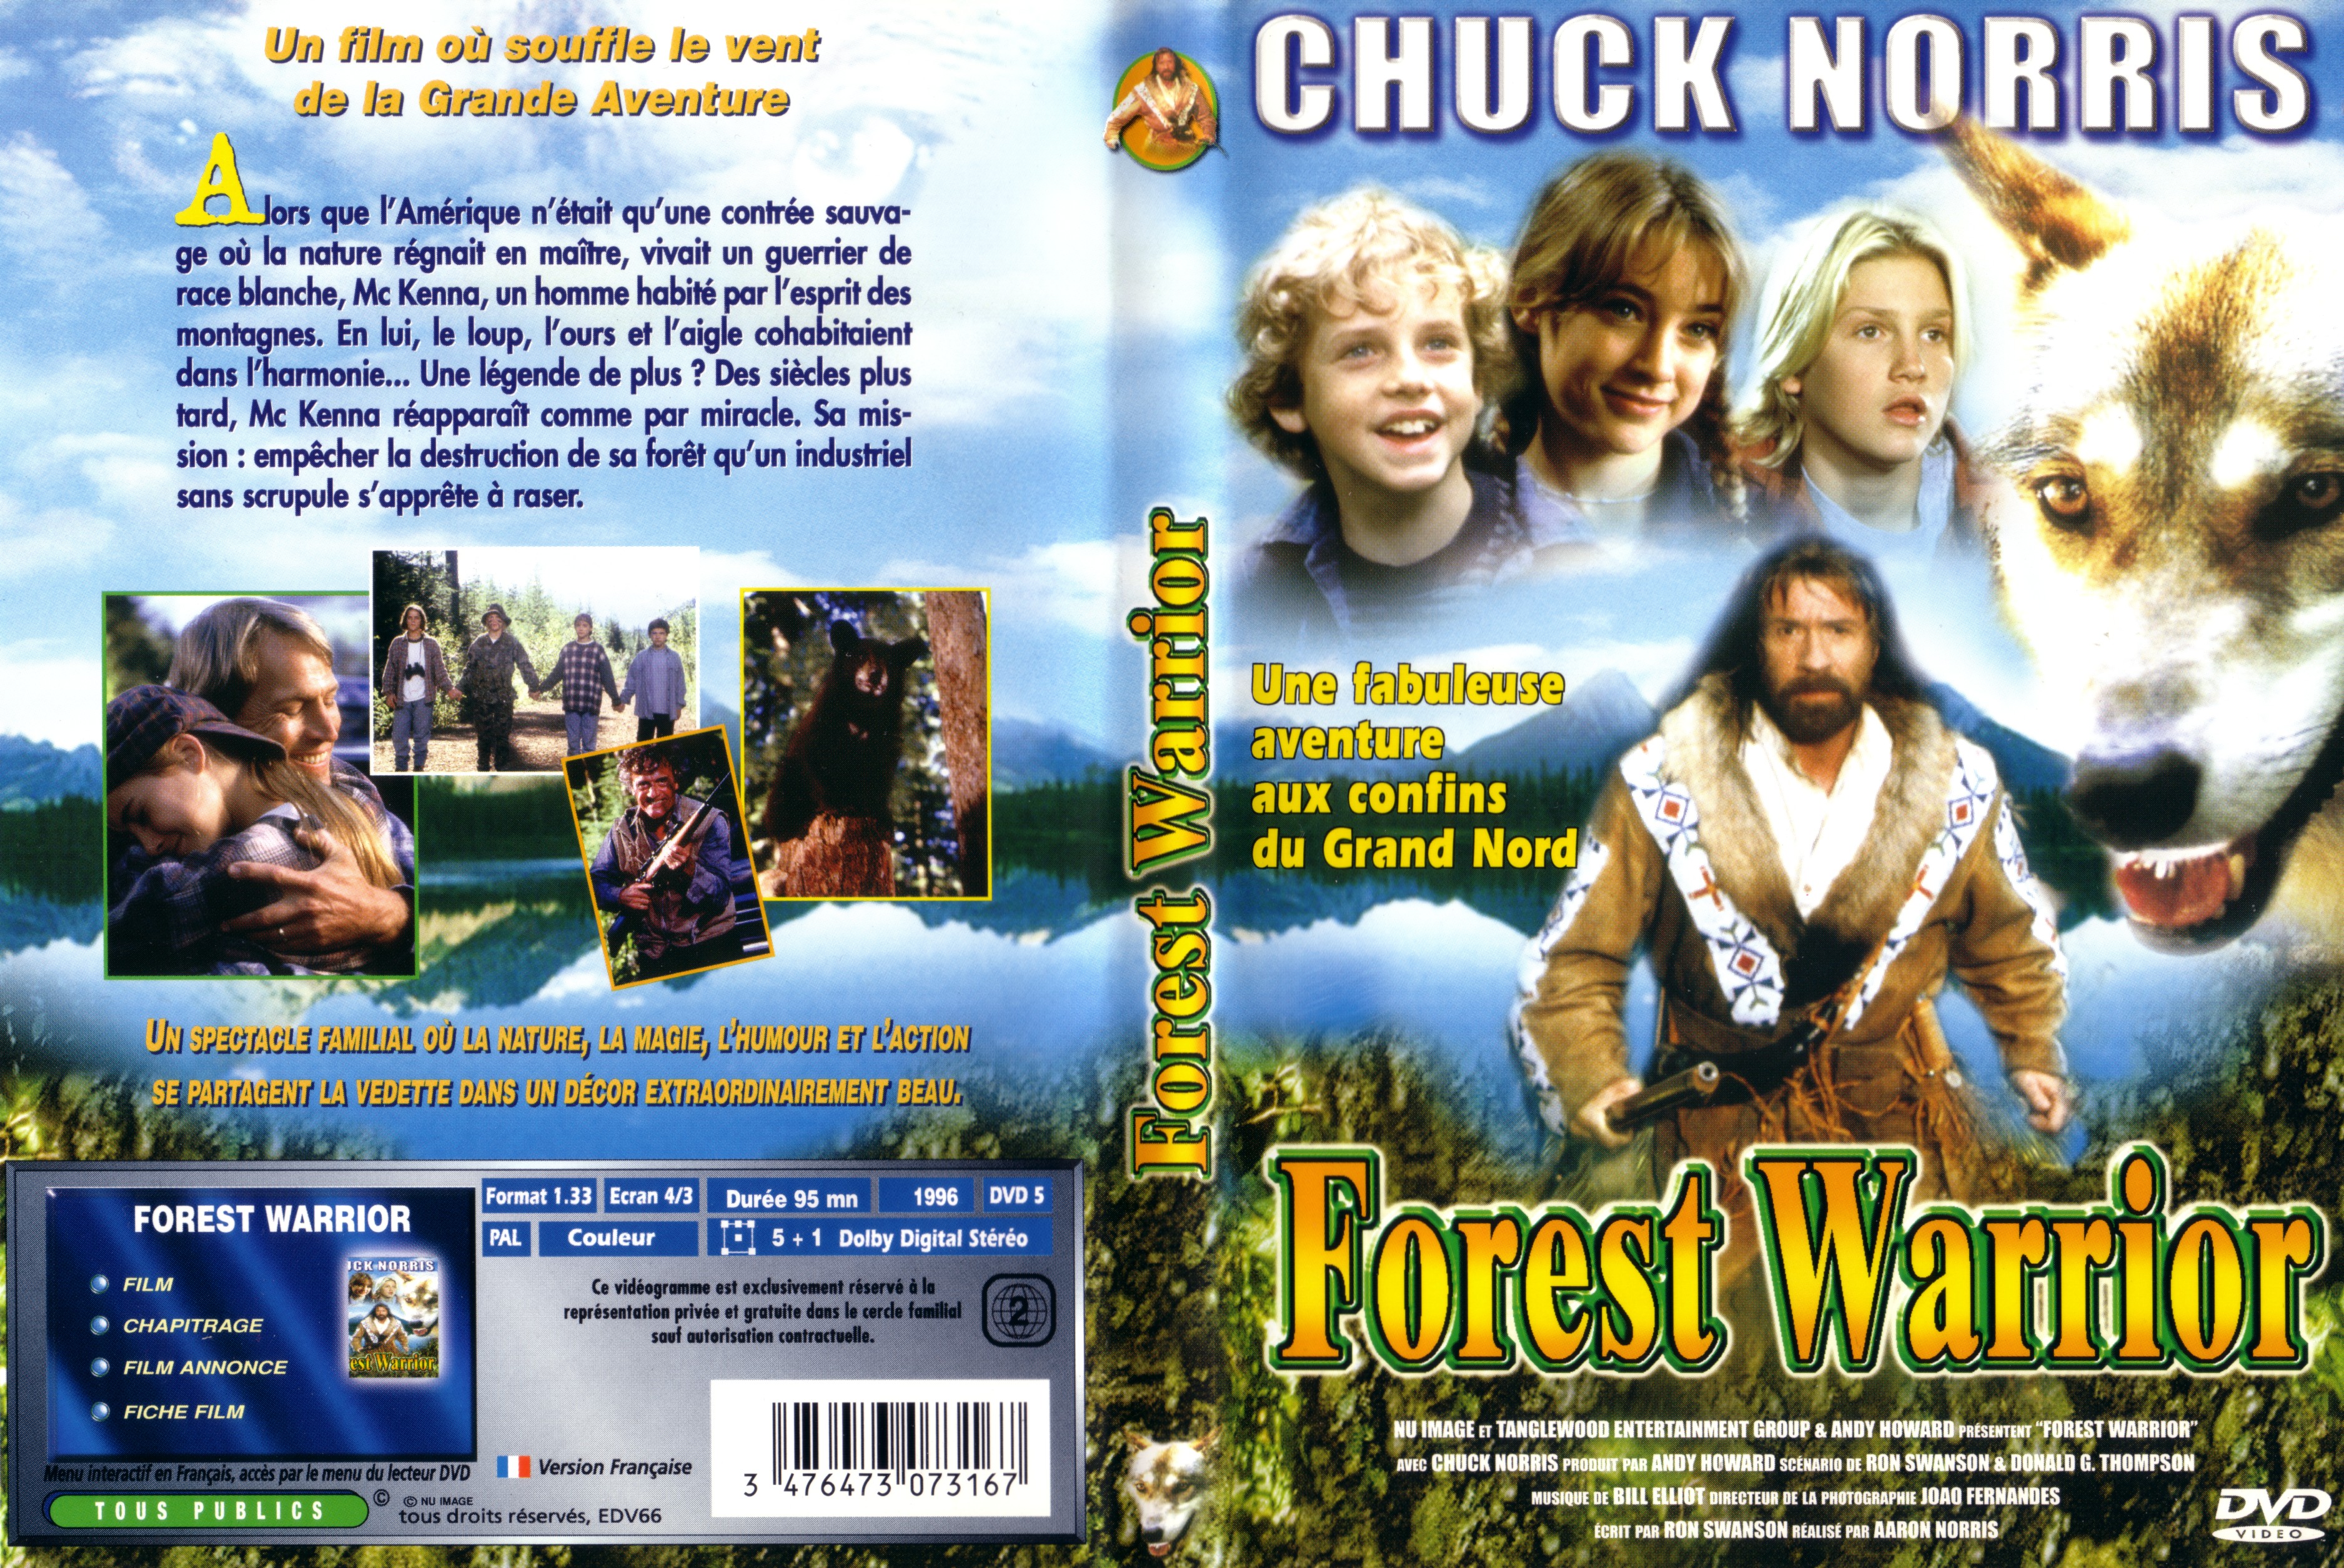 Jaquette DVD Forrest warrior